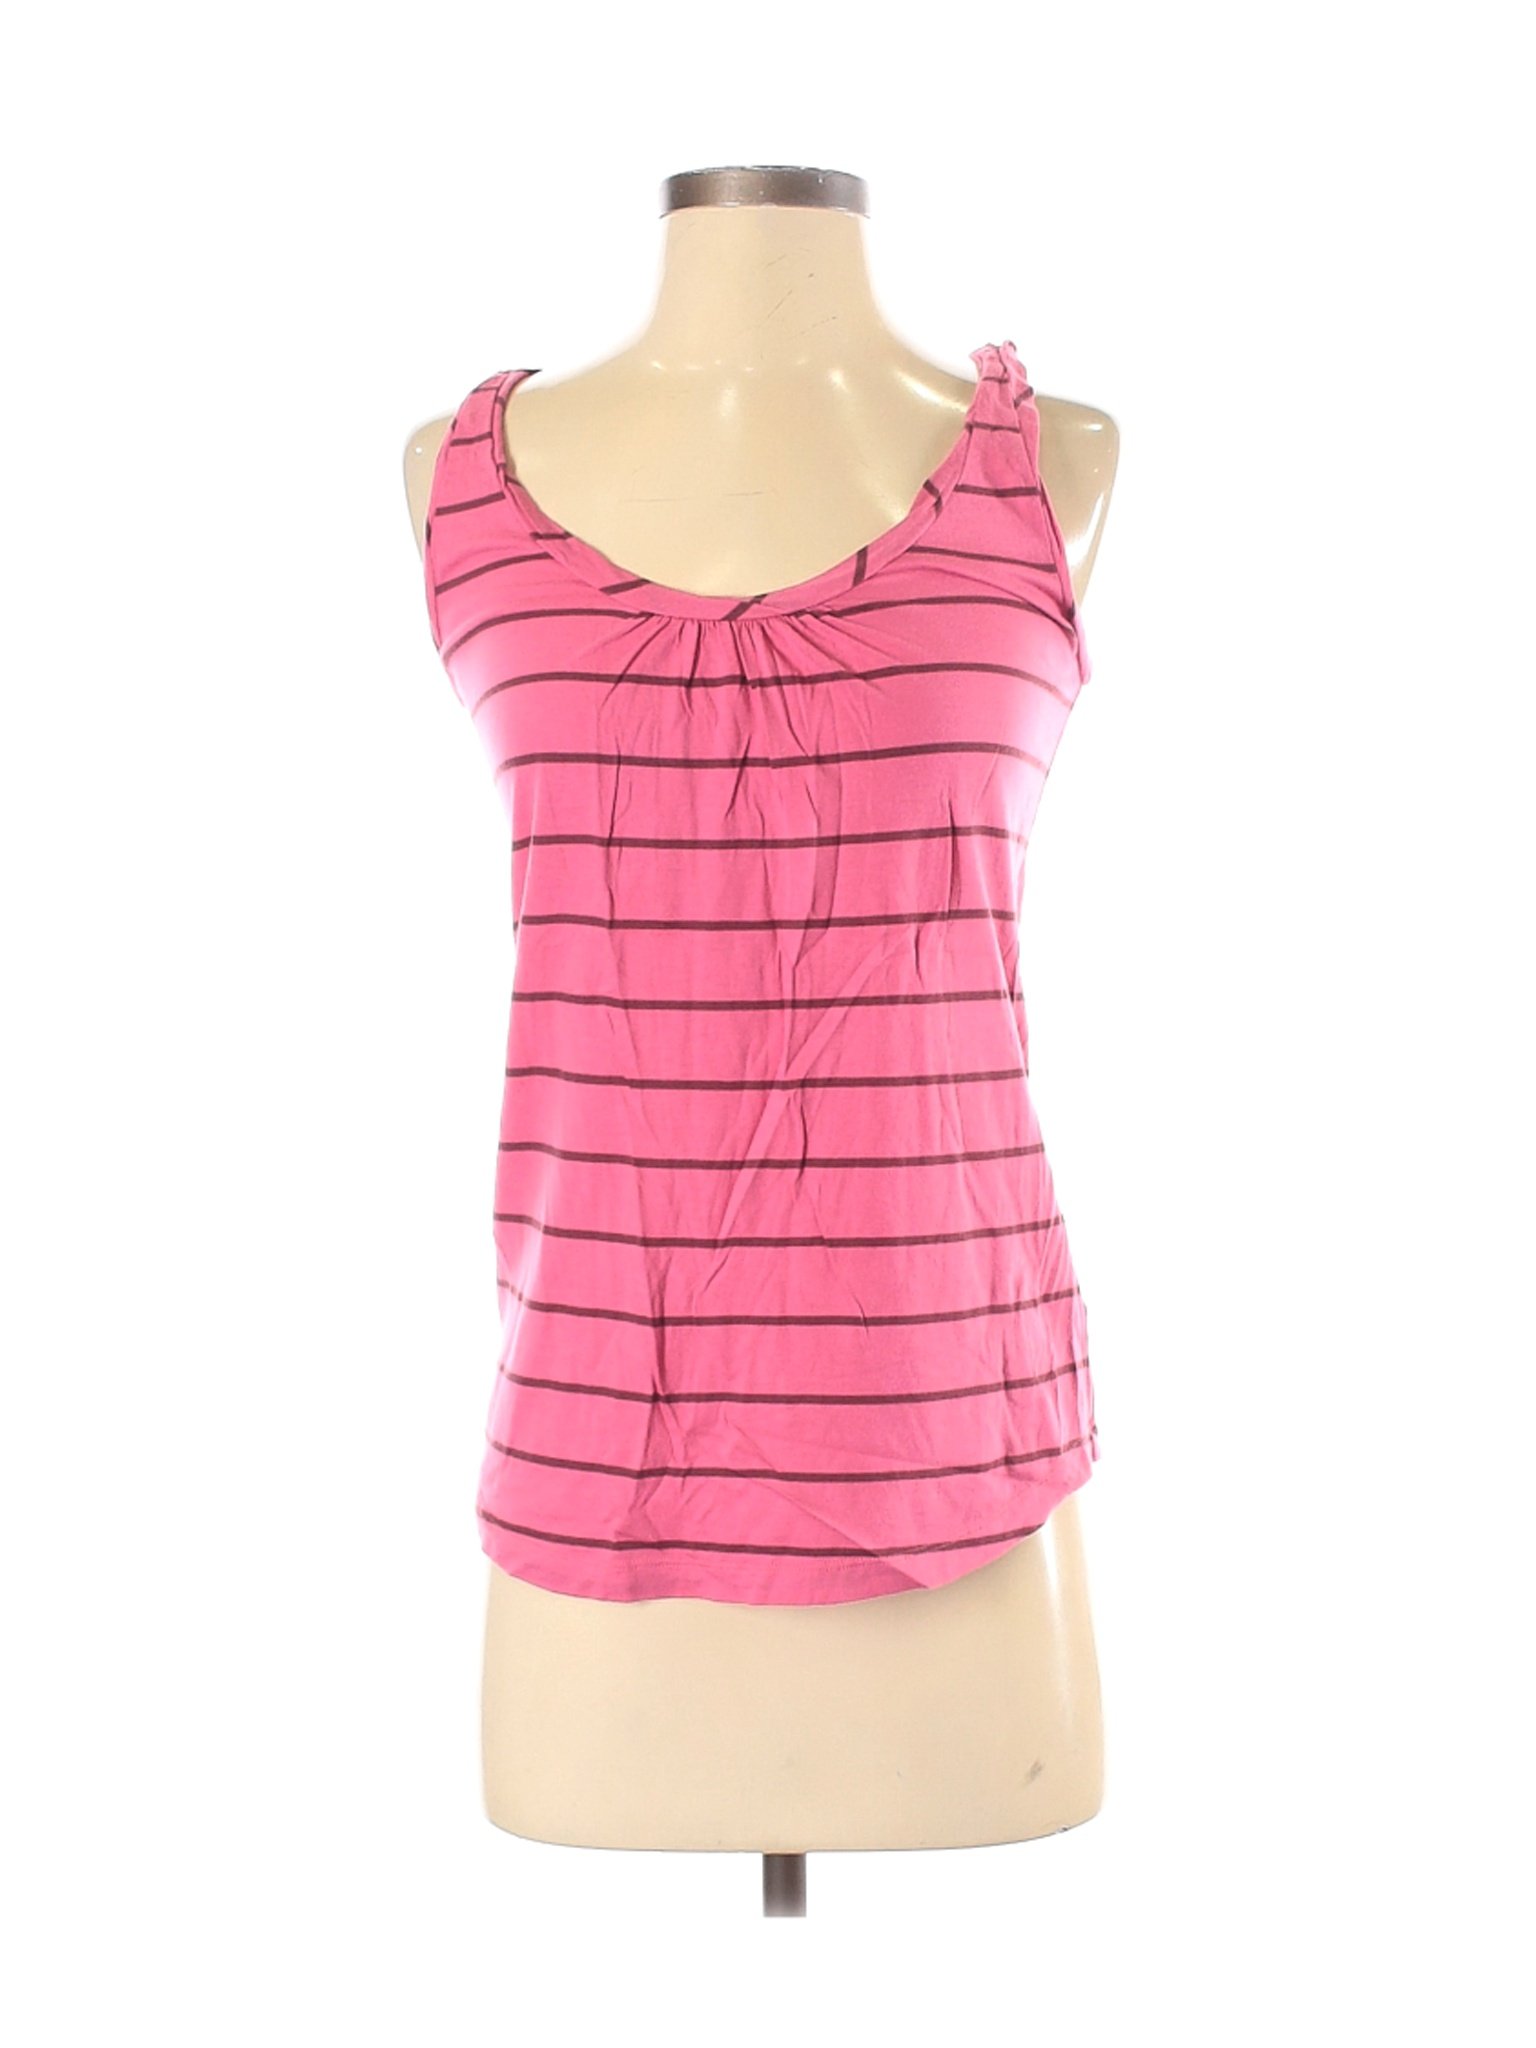 Juicy Couture Women Pink Sleeveless Top S | eBay